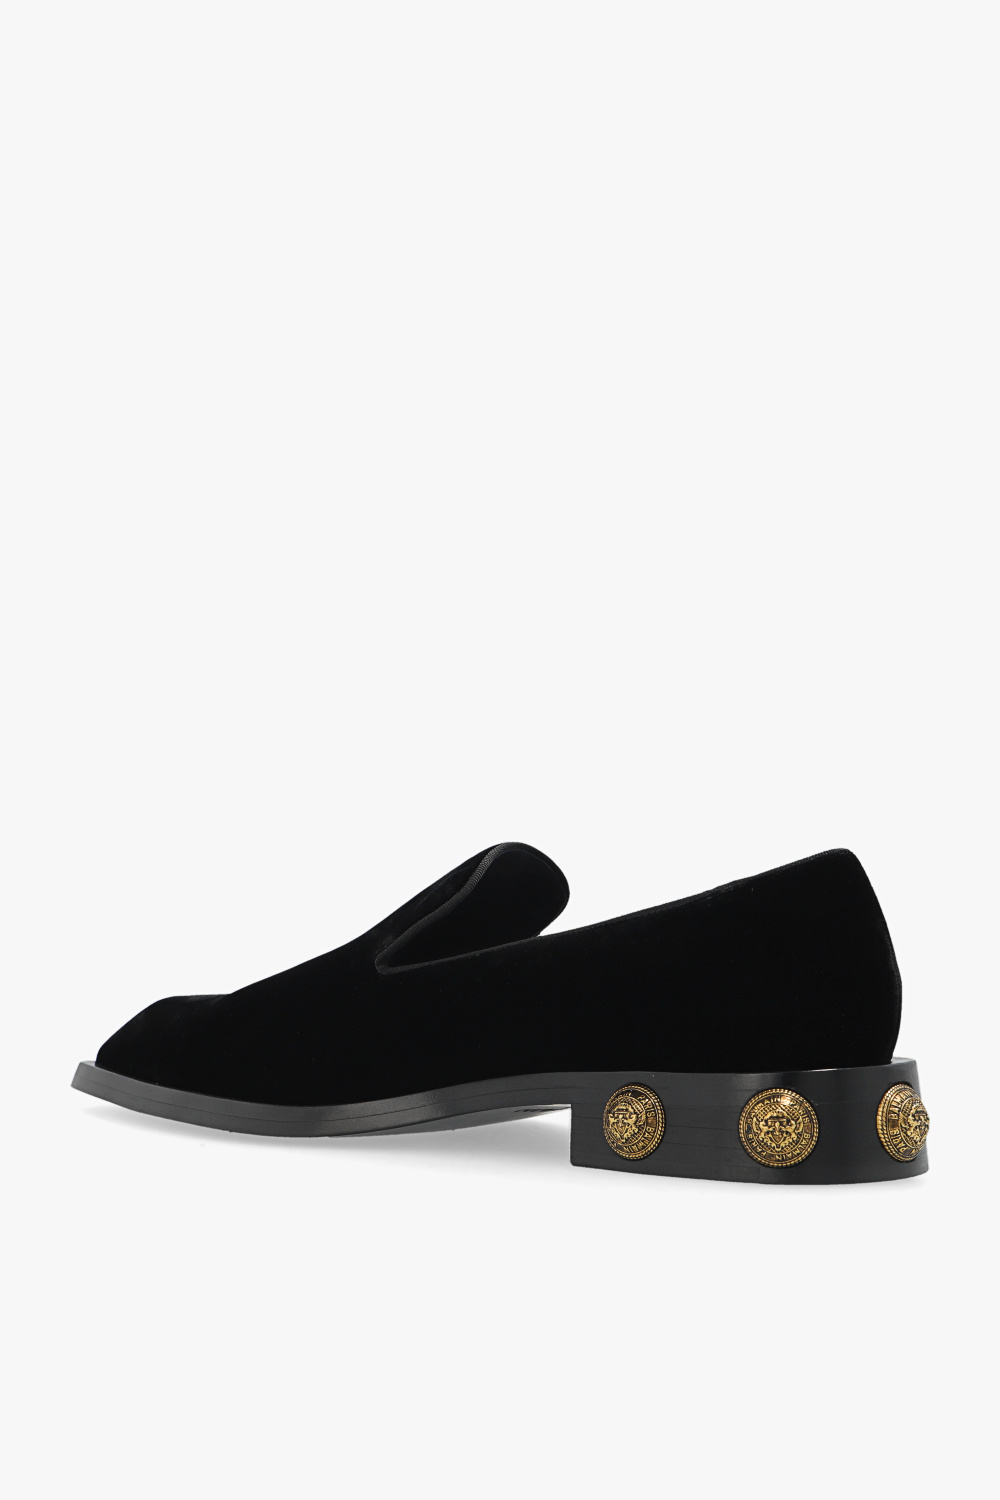 Zendaya Slips on Loafers & Louis Vuitton x Yayoi Kusama Bag in